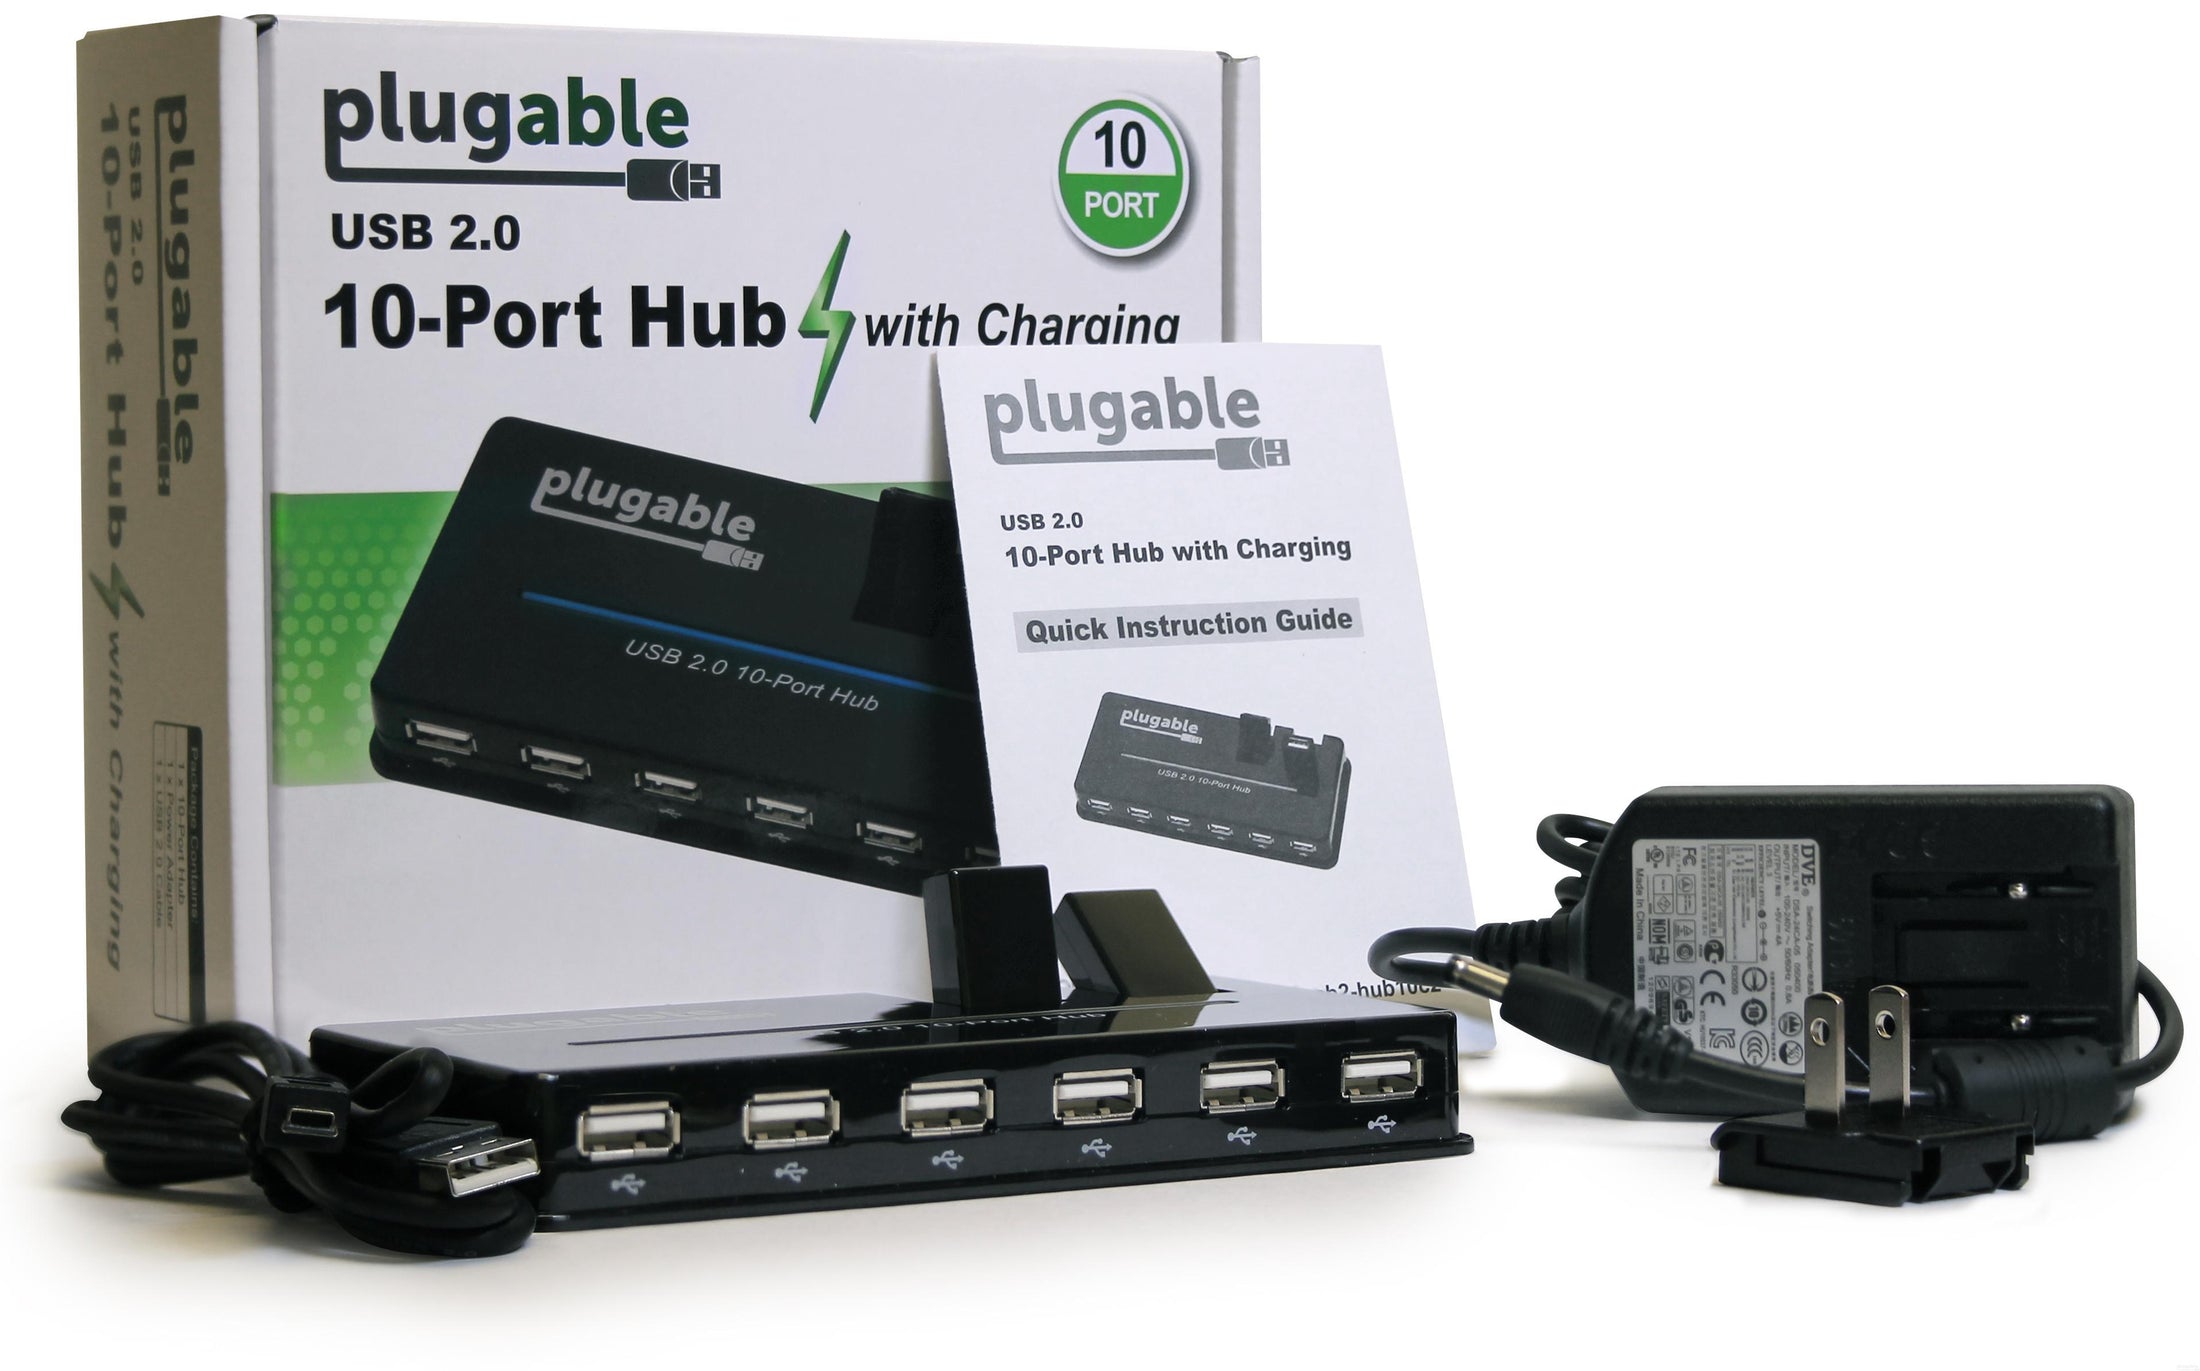 Plugable USB 2.0 10-Port Hub with 20W Power Adapter – Plugable Technologies